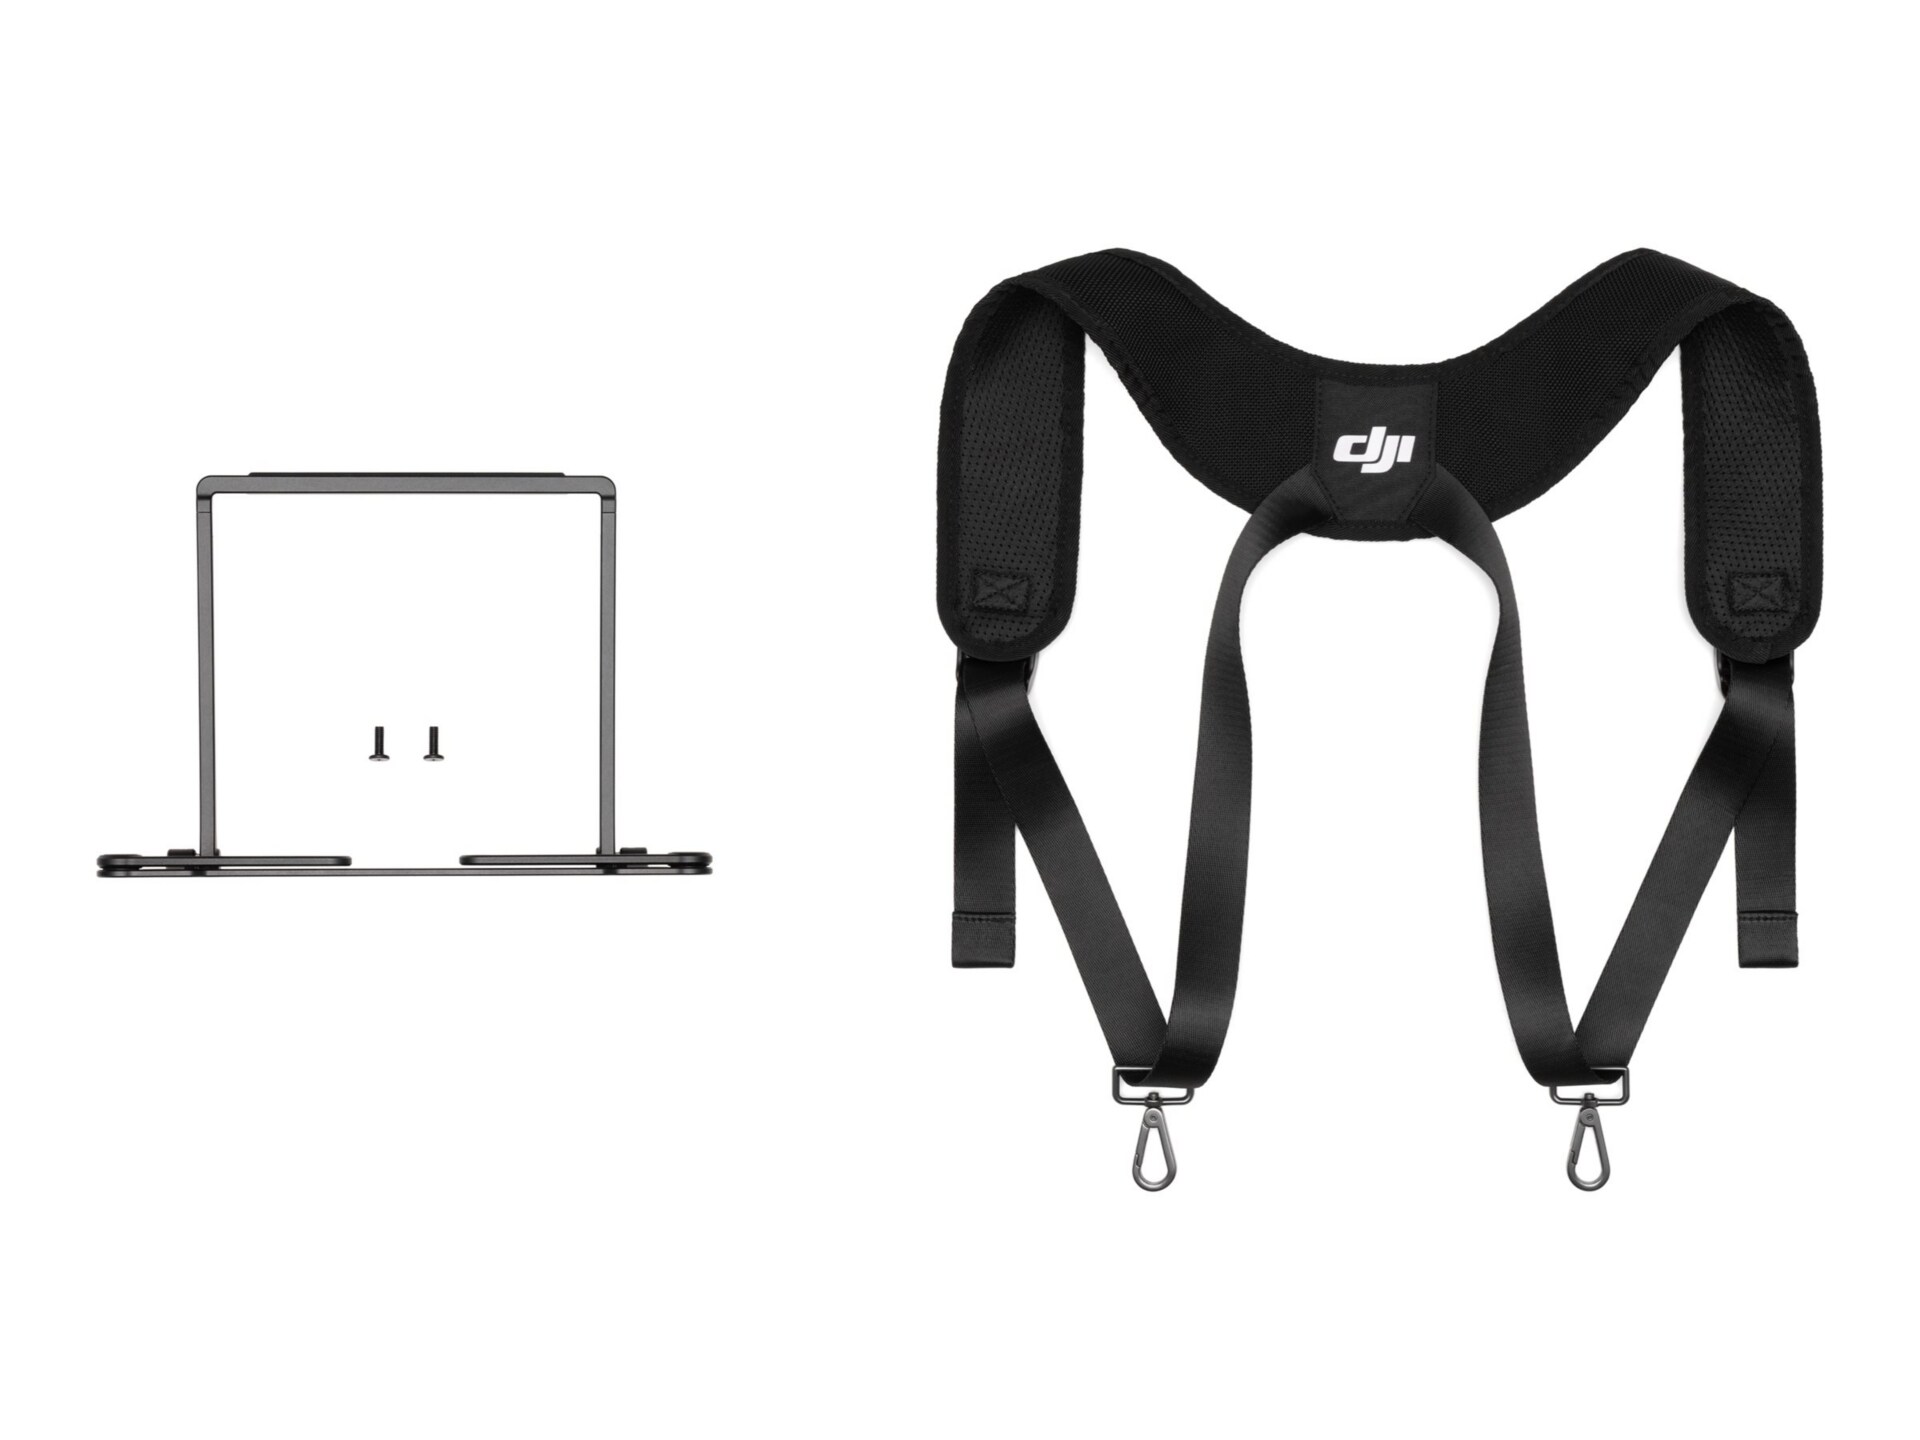 DJI - waist strap for remote control